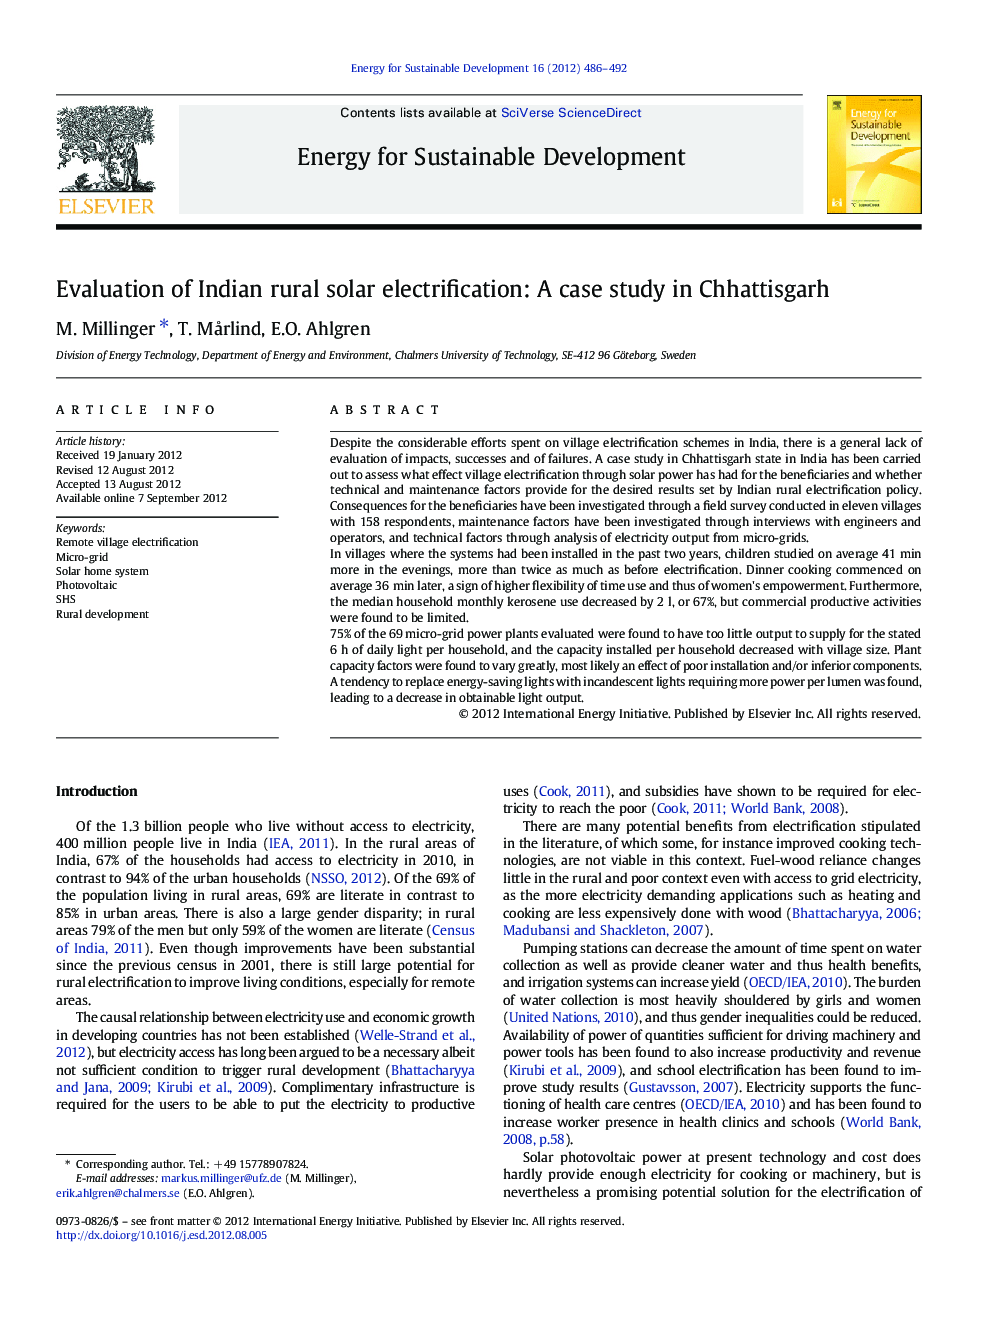 Evaluation of Indian rural solar electrification: A case study in Chhattisgarh